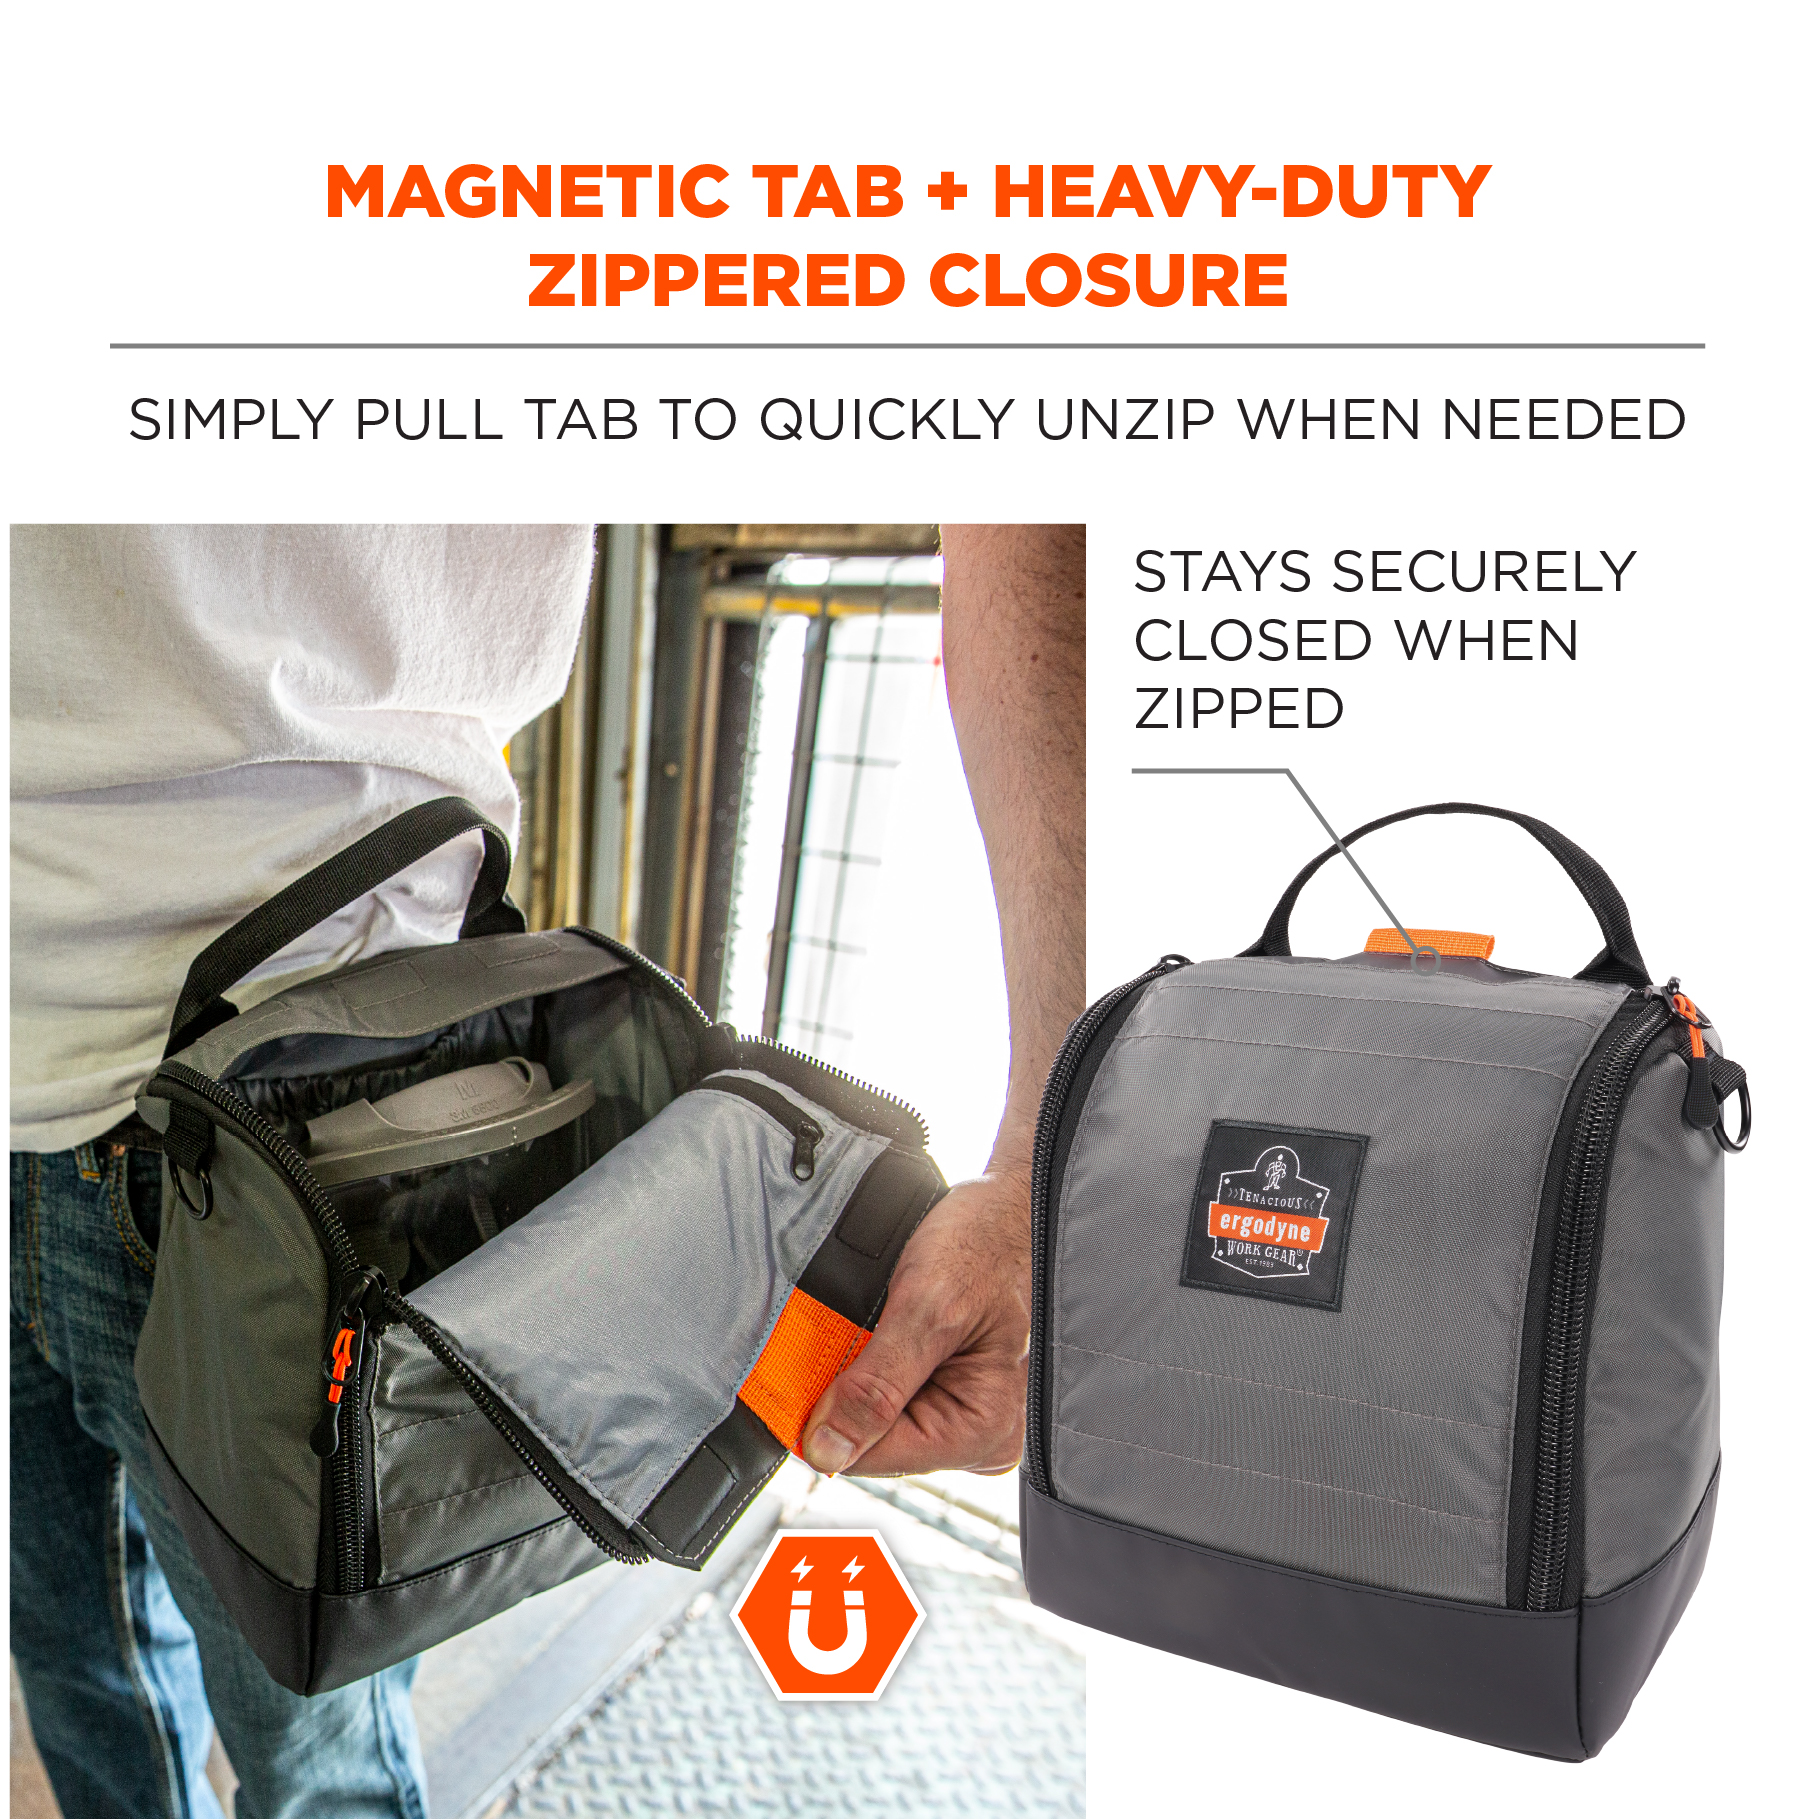 https://www.ergodyne.com/sites/default/files/product-images/13185-5185-respirator-bag-gray-magnetic-tab-heavy-duty-zippered-closure.jpg